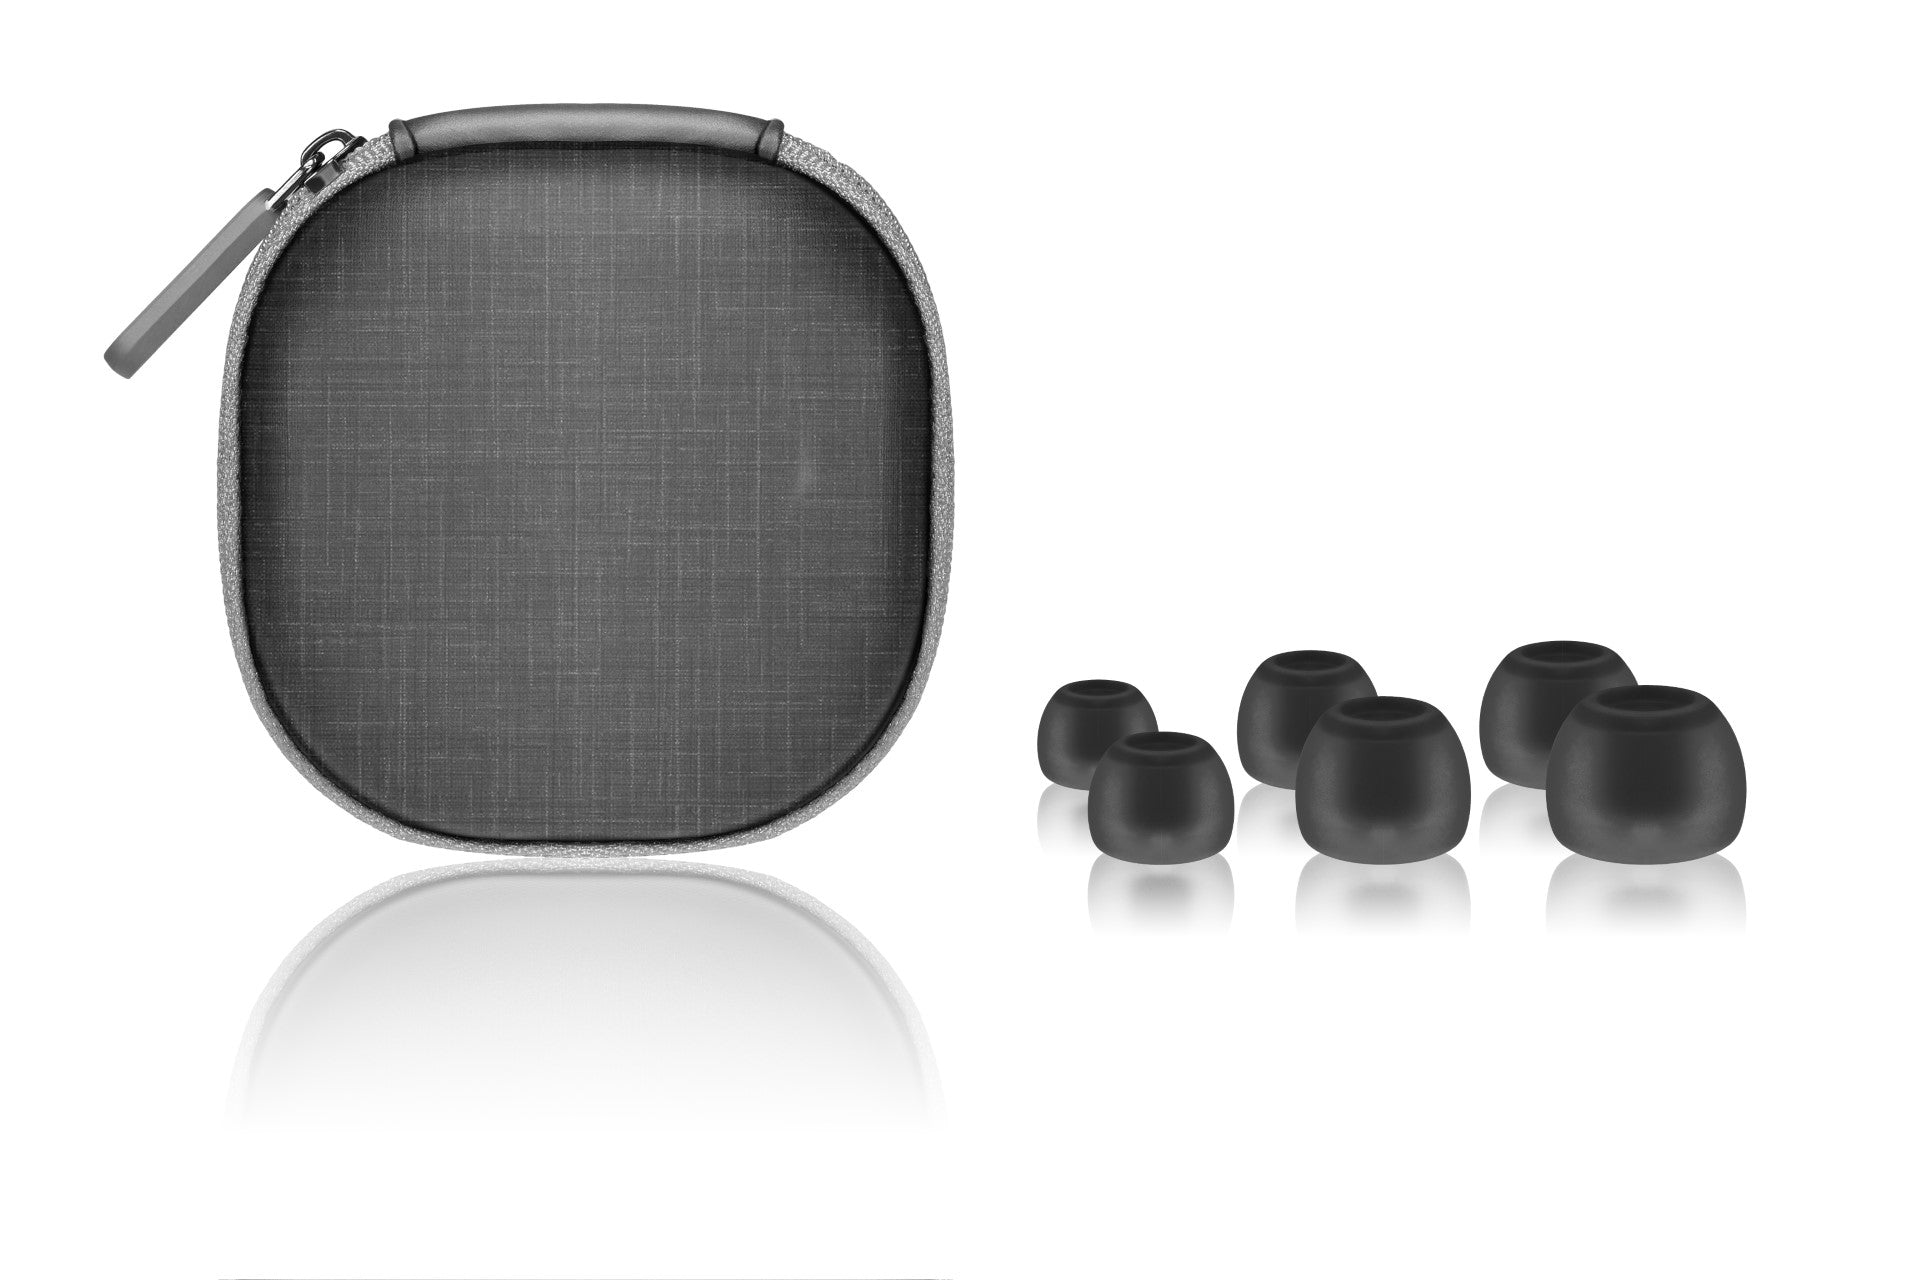 SoundMAGIC E11C In Ear Isolating Earphones with Mic - Black - Refurbished